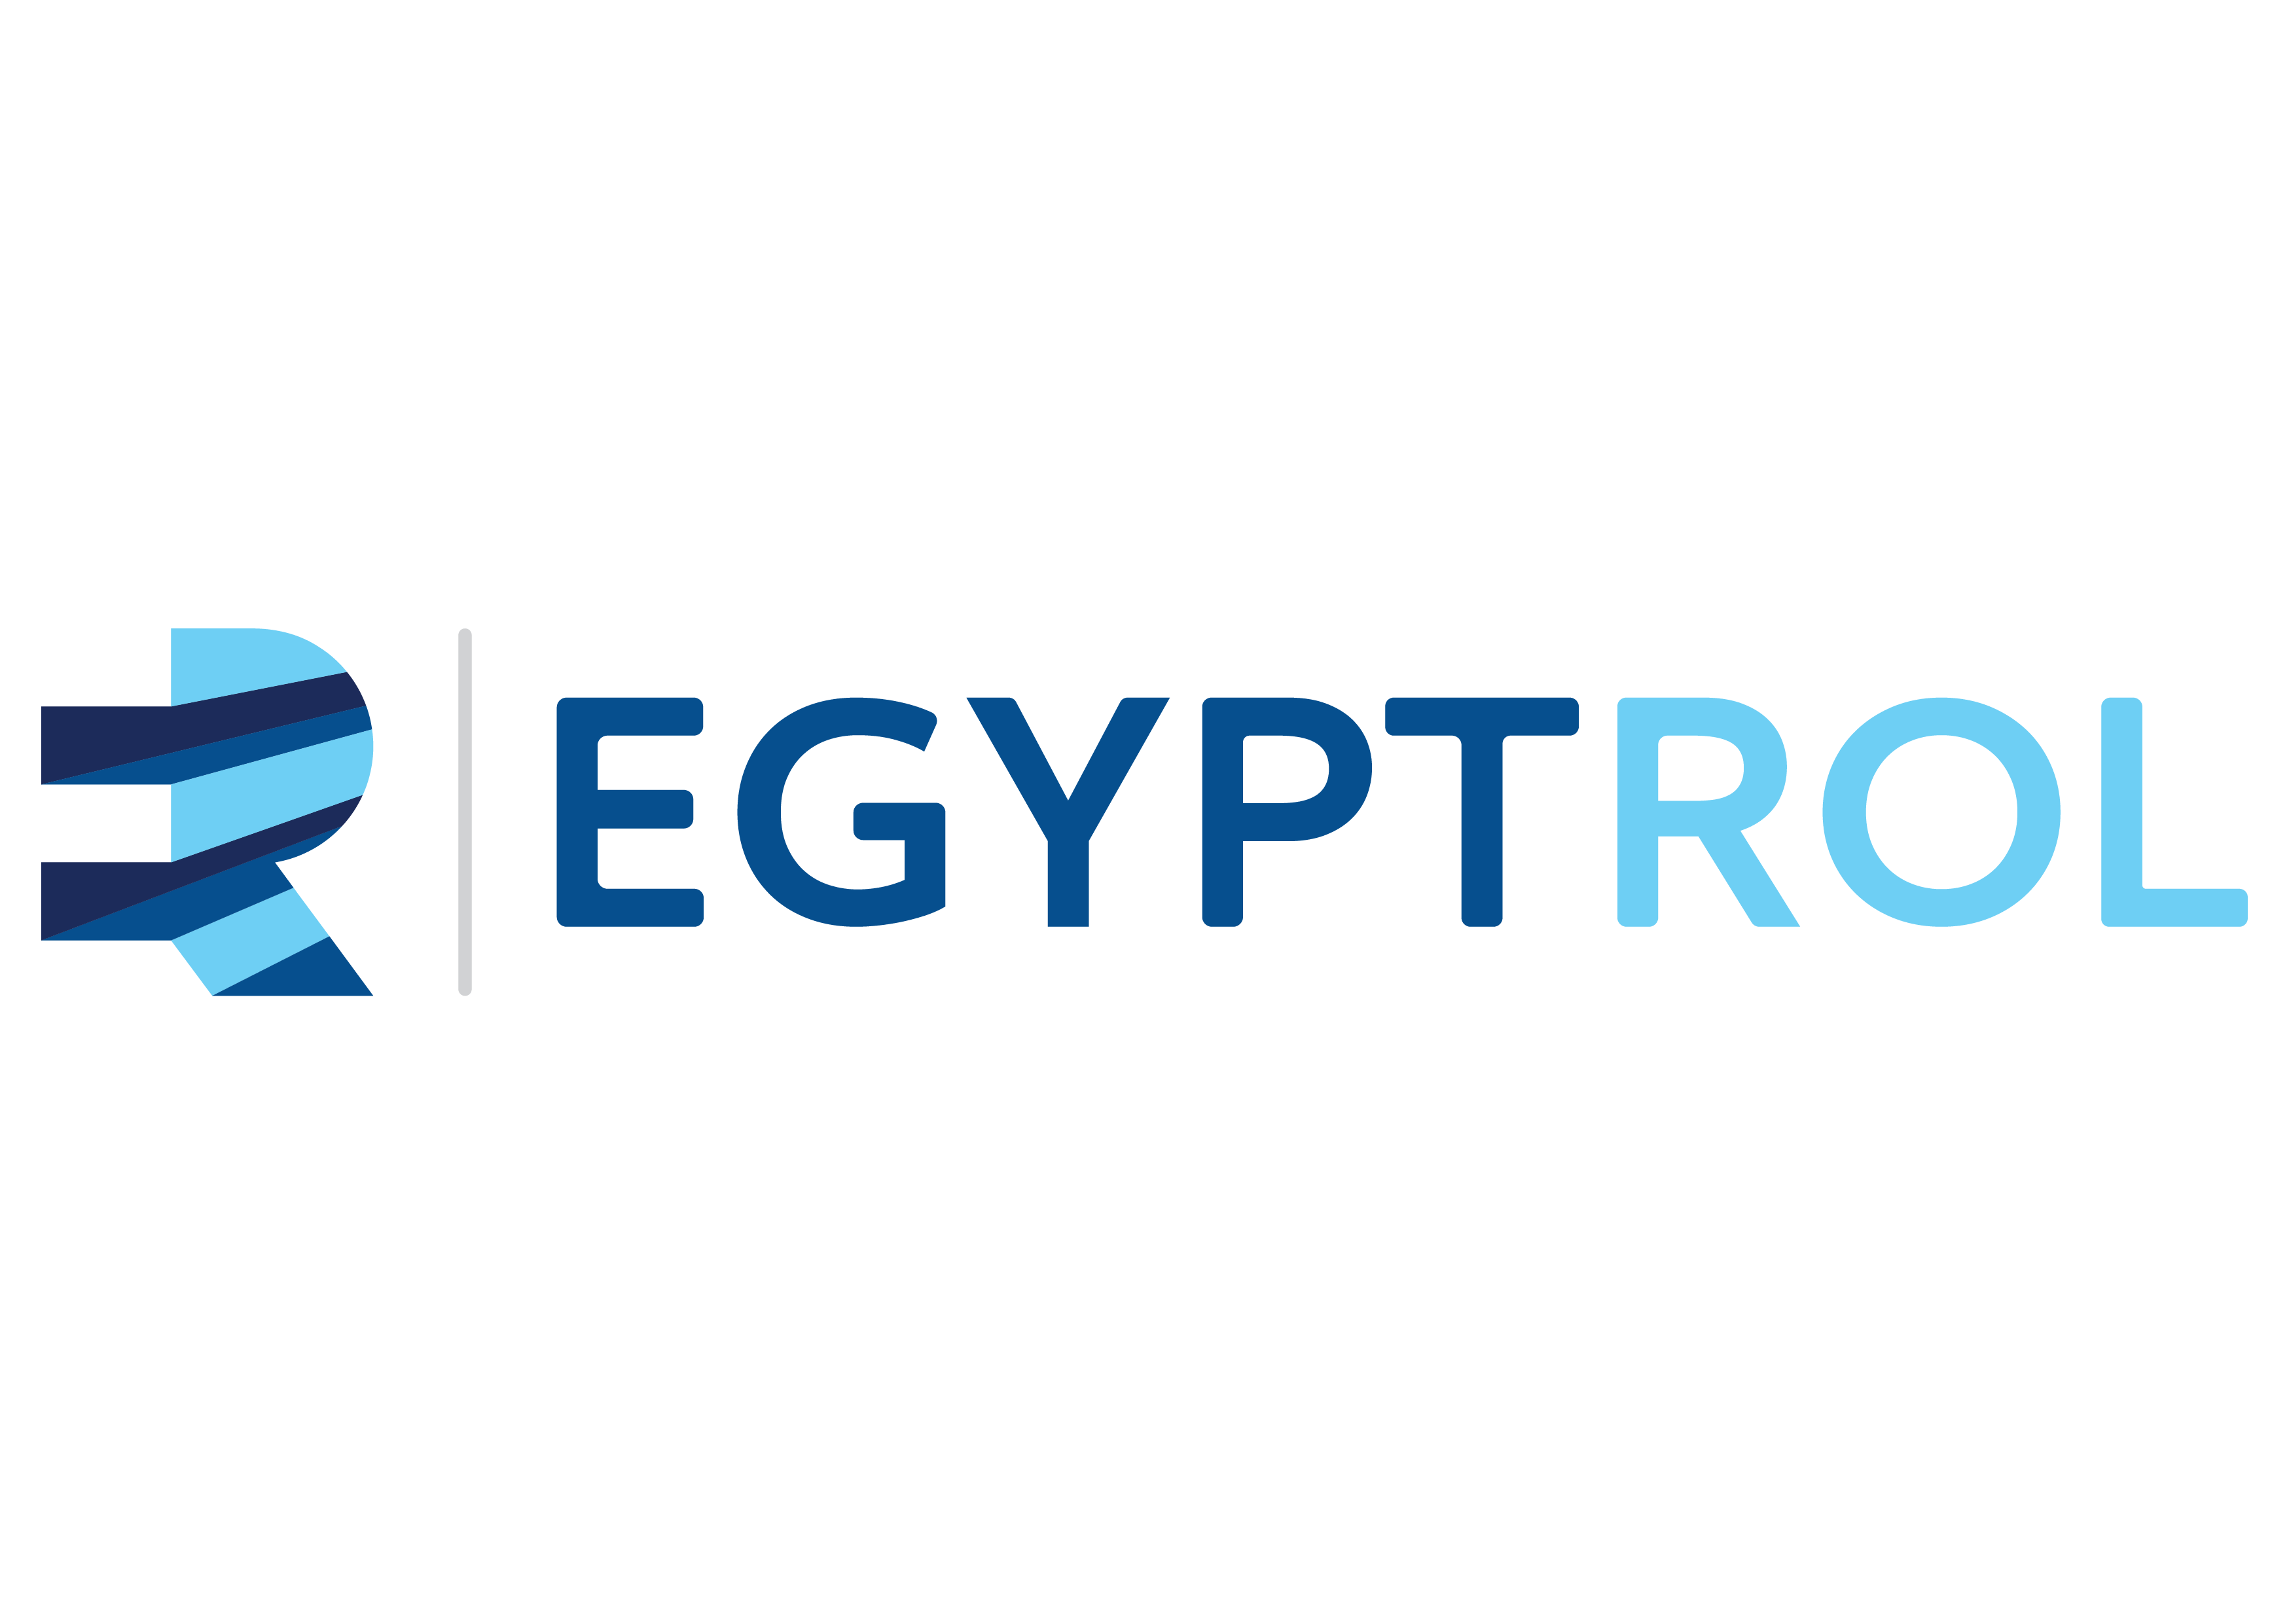 PowerServ-eg acquired by EGYPTROL